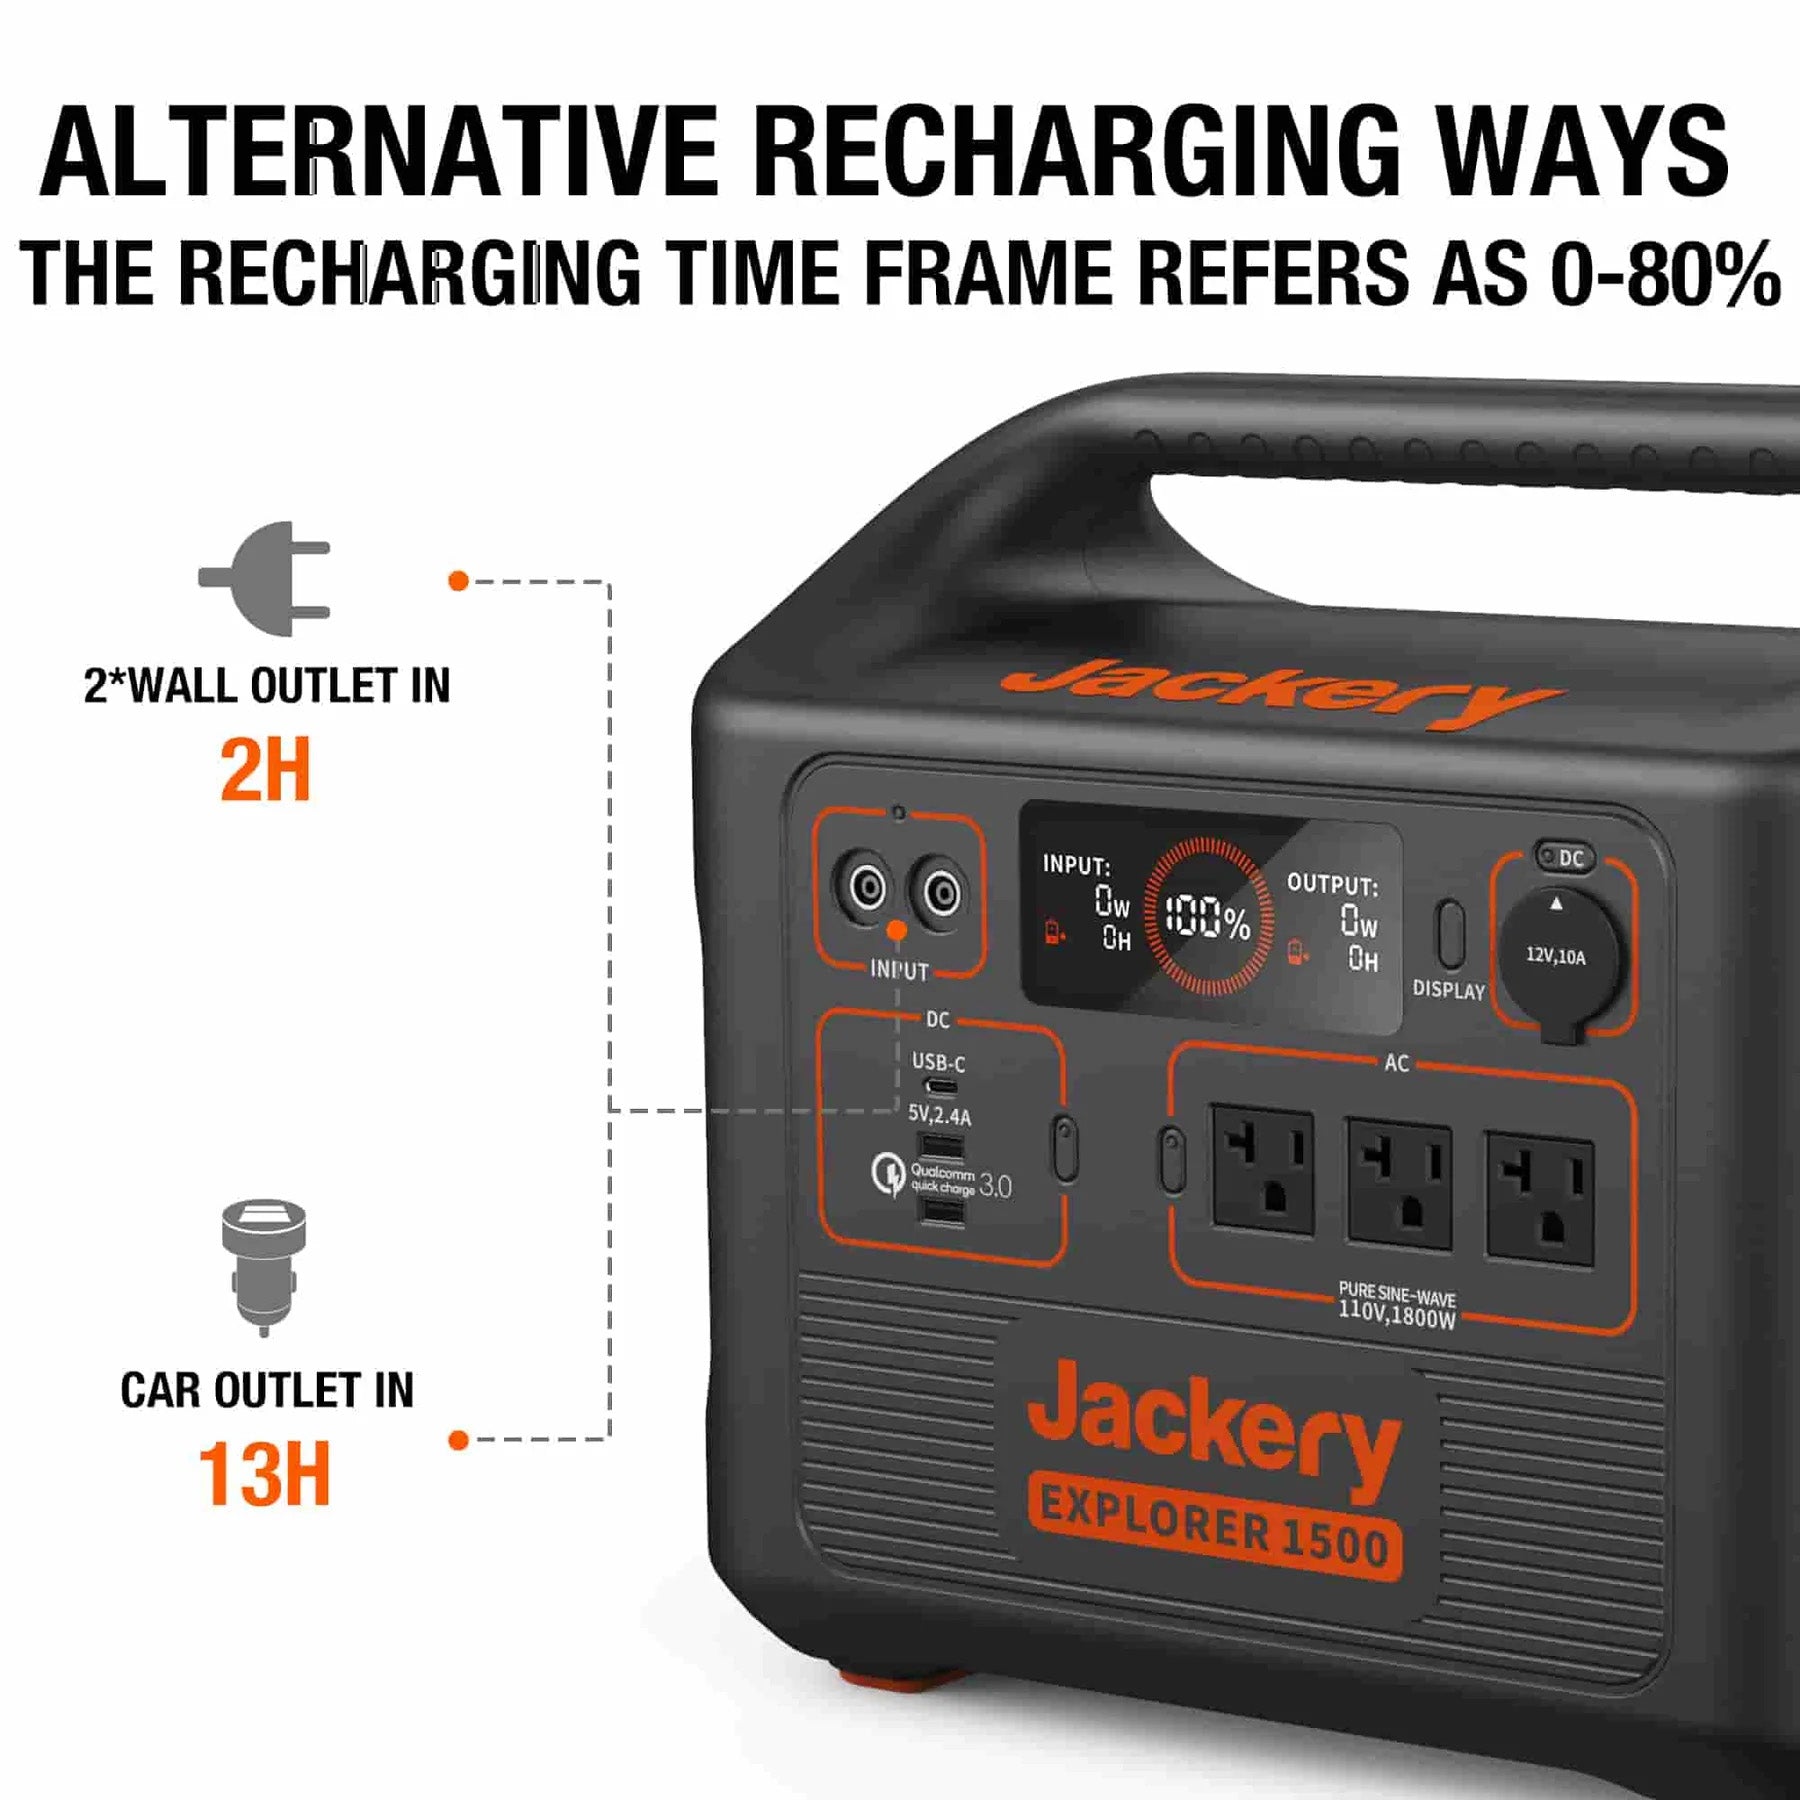 Jackery Solar Generator 1500 - Alternating Recharging Ways